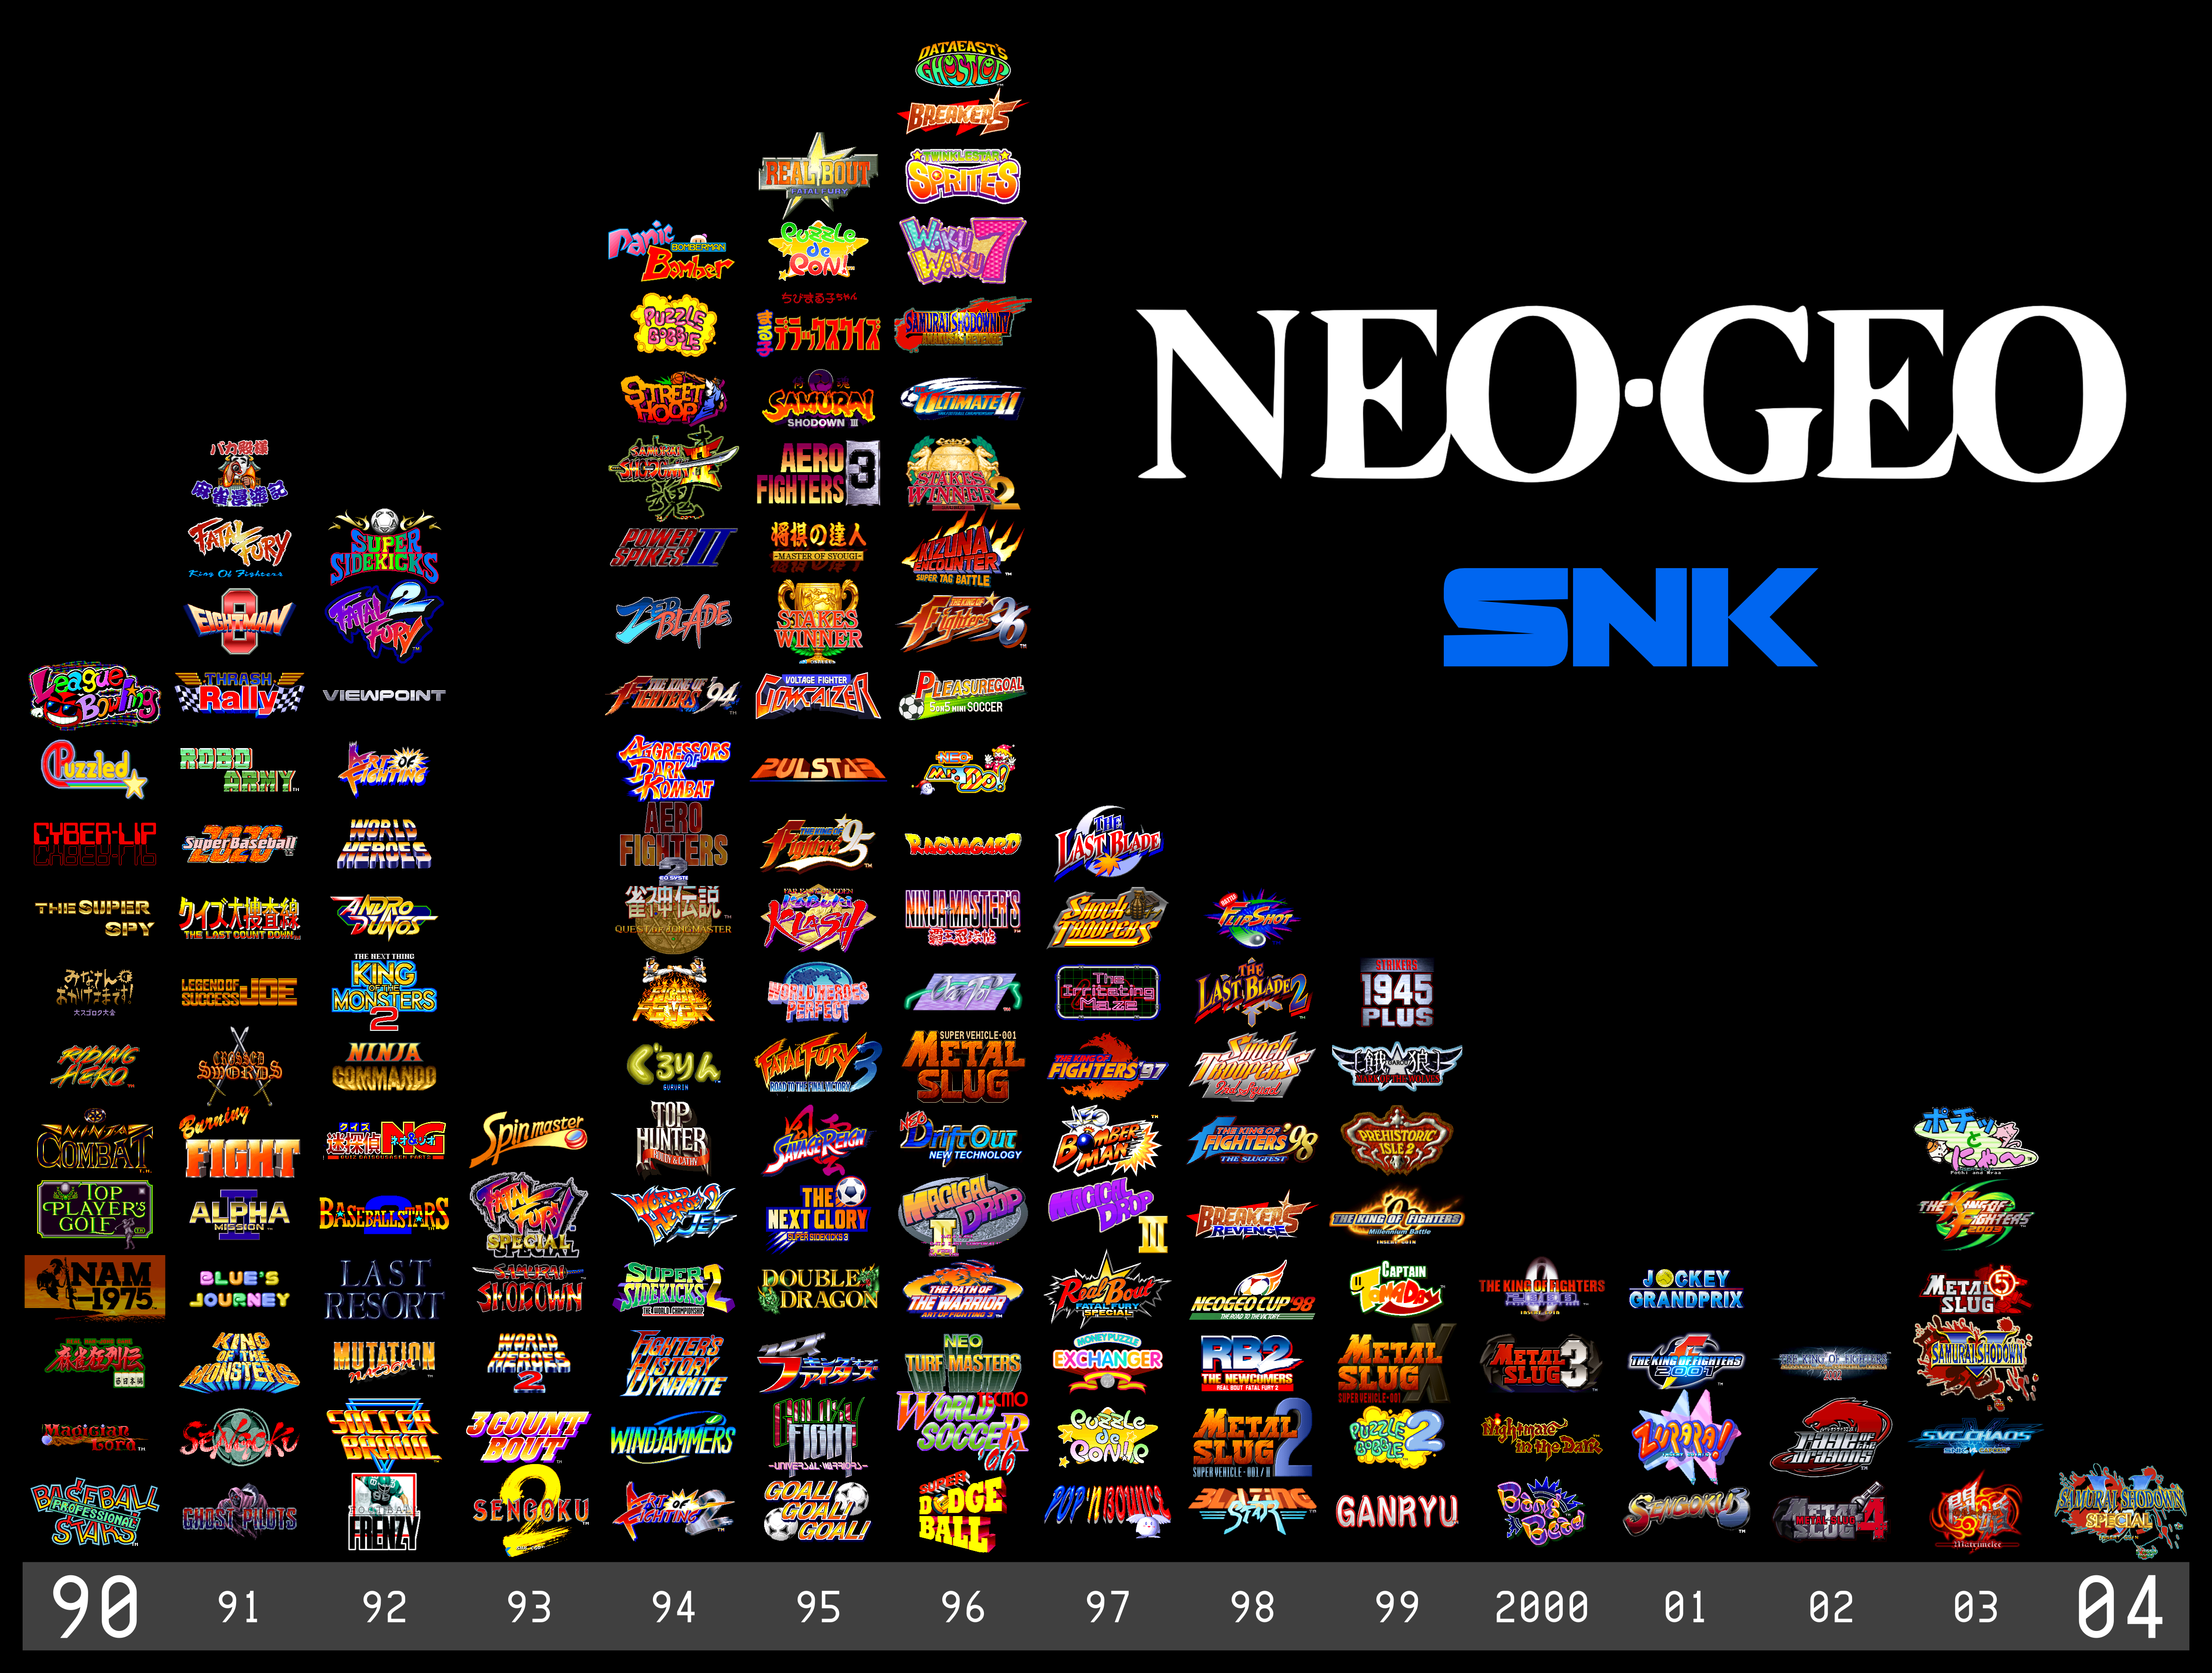 Neo-Geo games